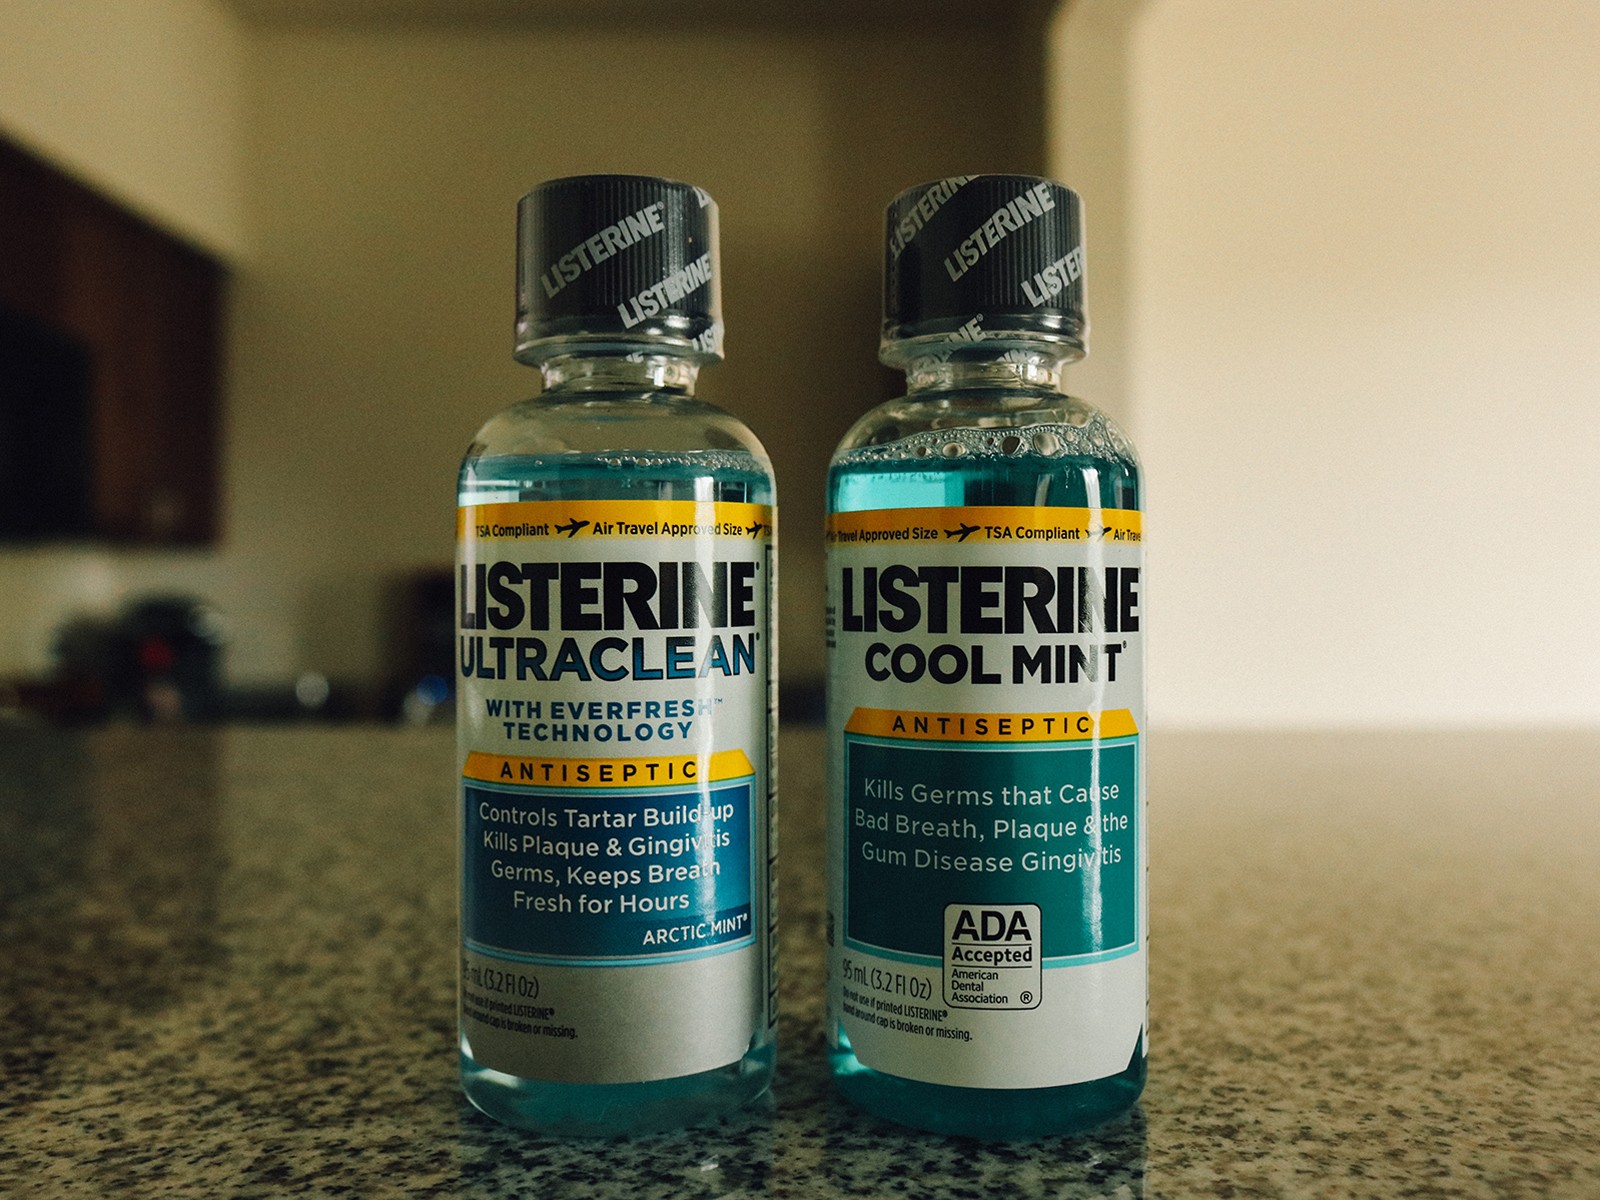 Does Listerine Hurt Enamel?